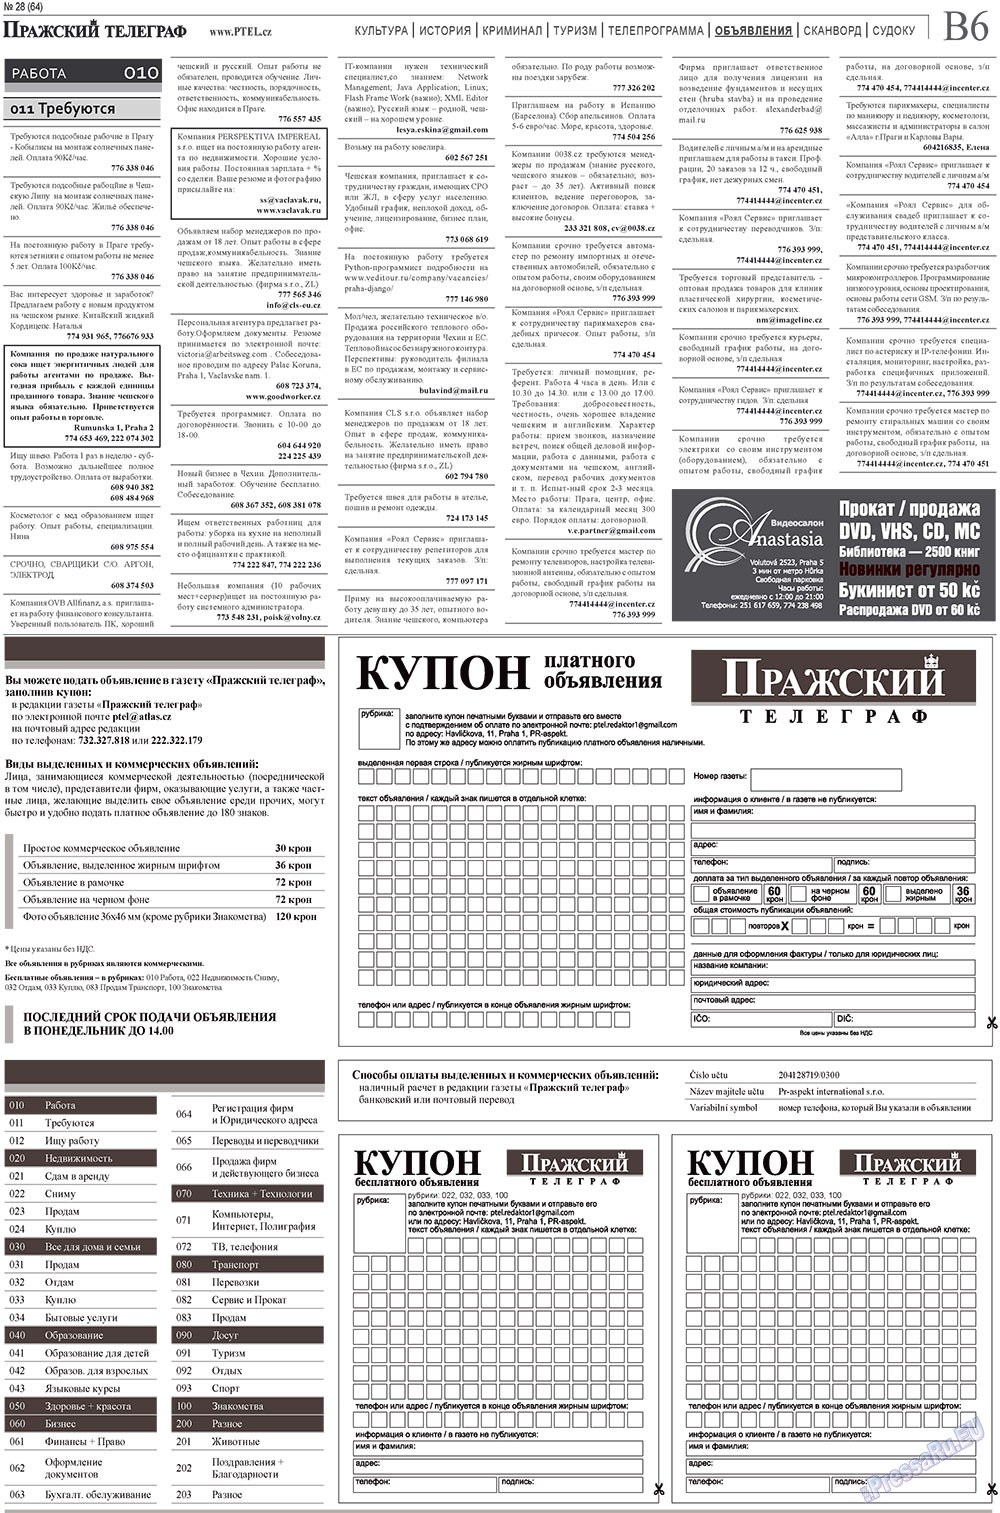 Пражский телеграф, газета. 2010 №29 стр.14